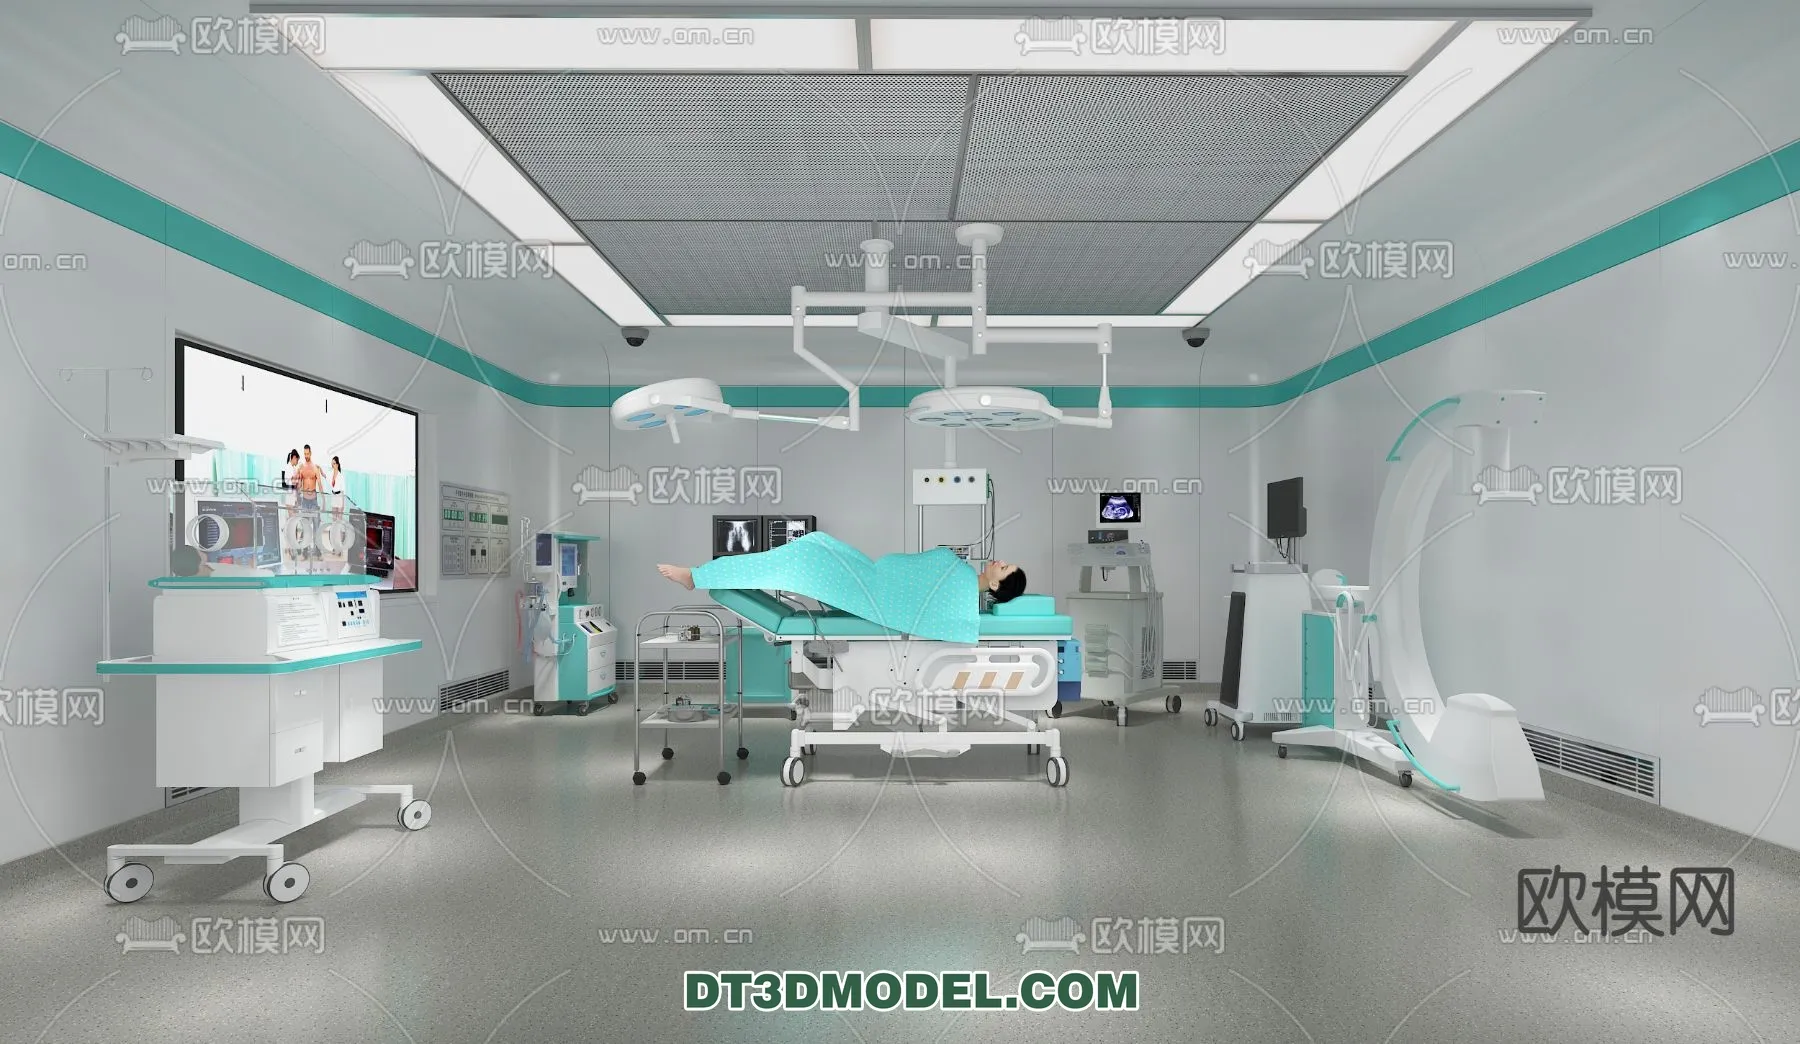 HOSPITAL 3D SCENES – MODERN – 0012